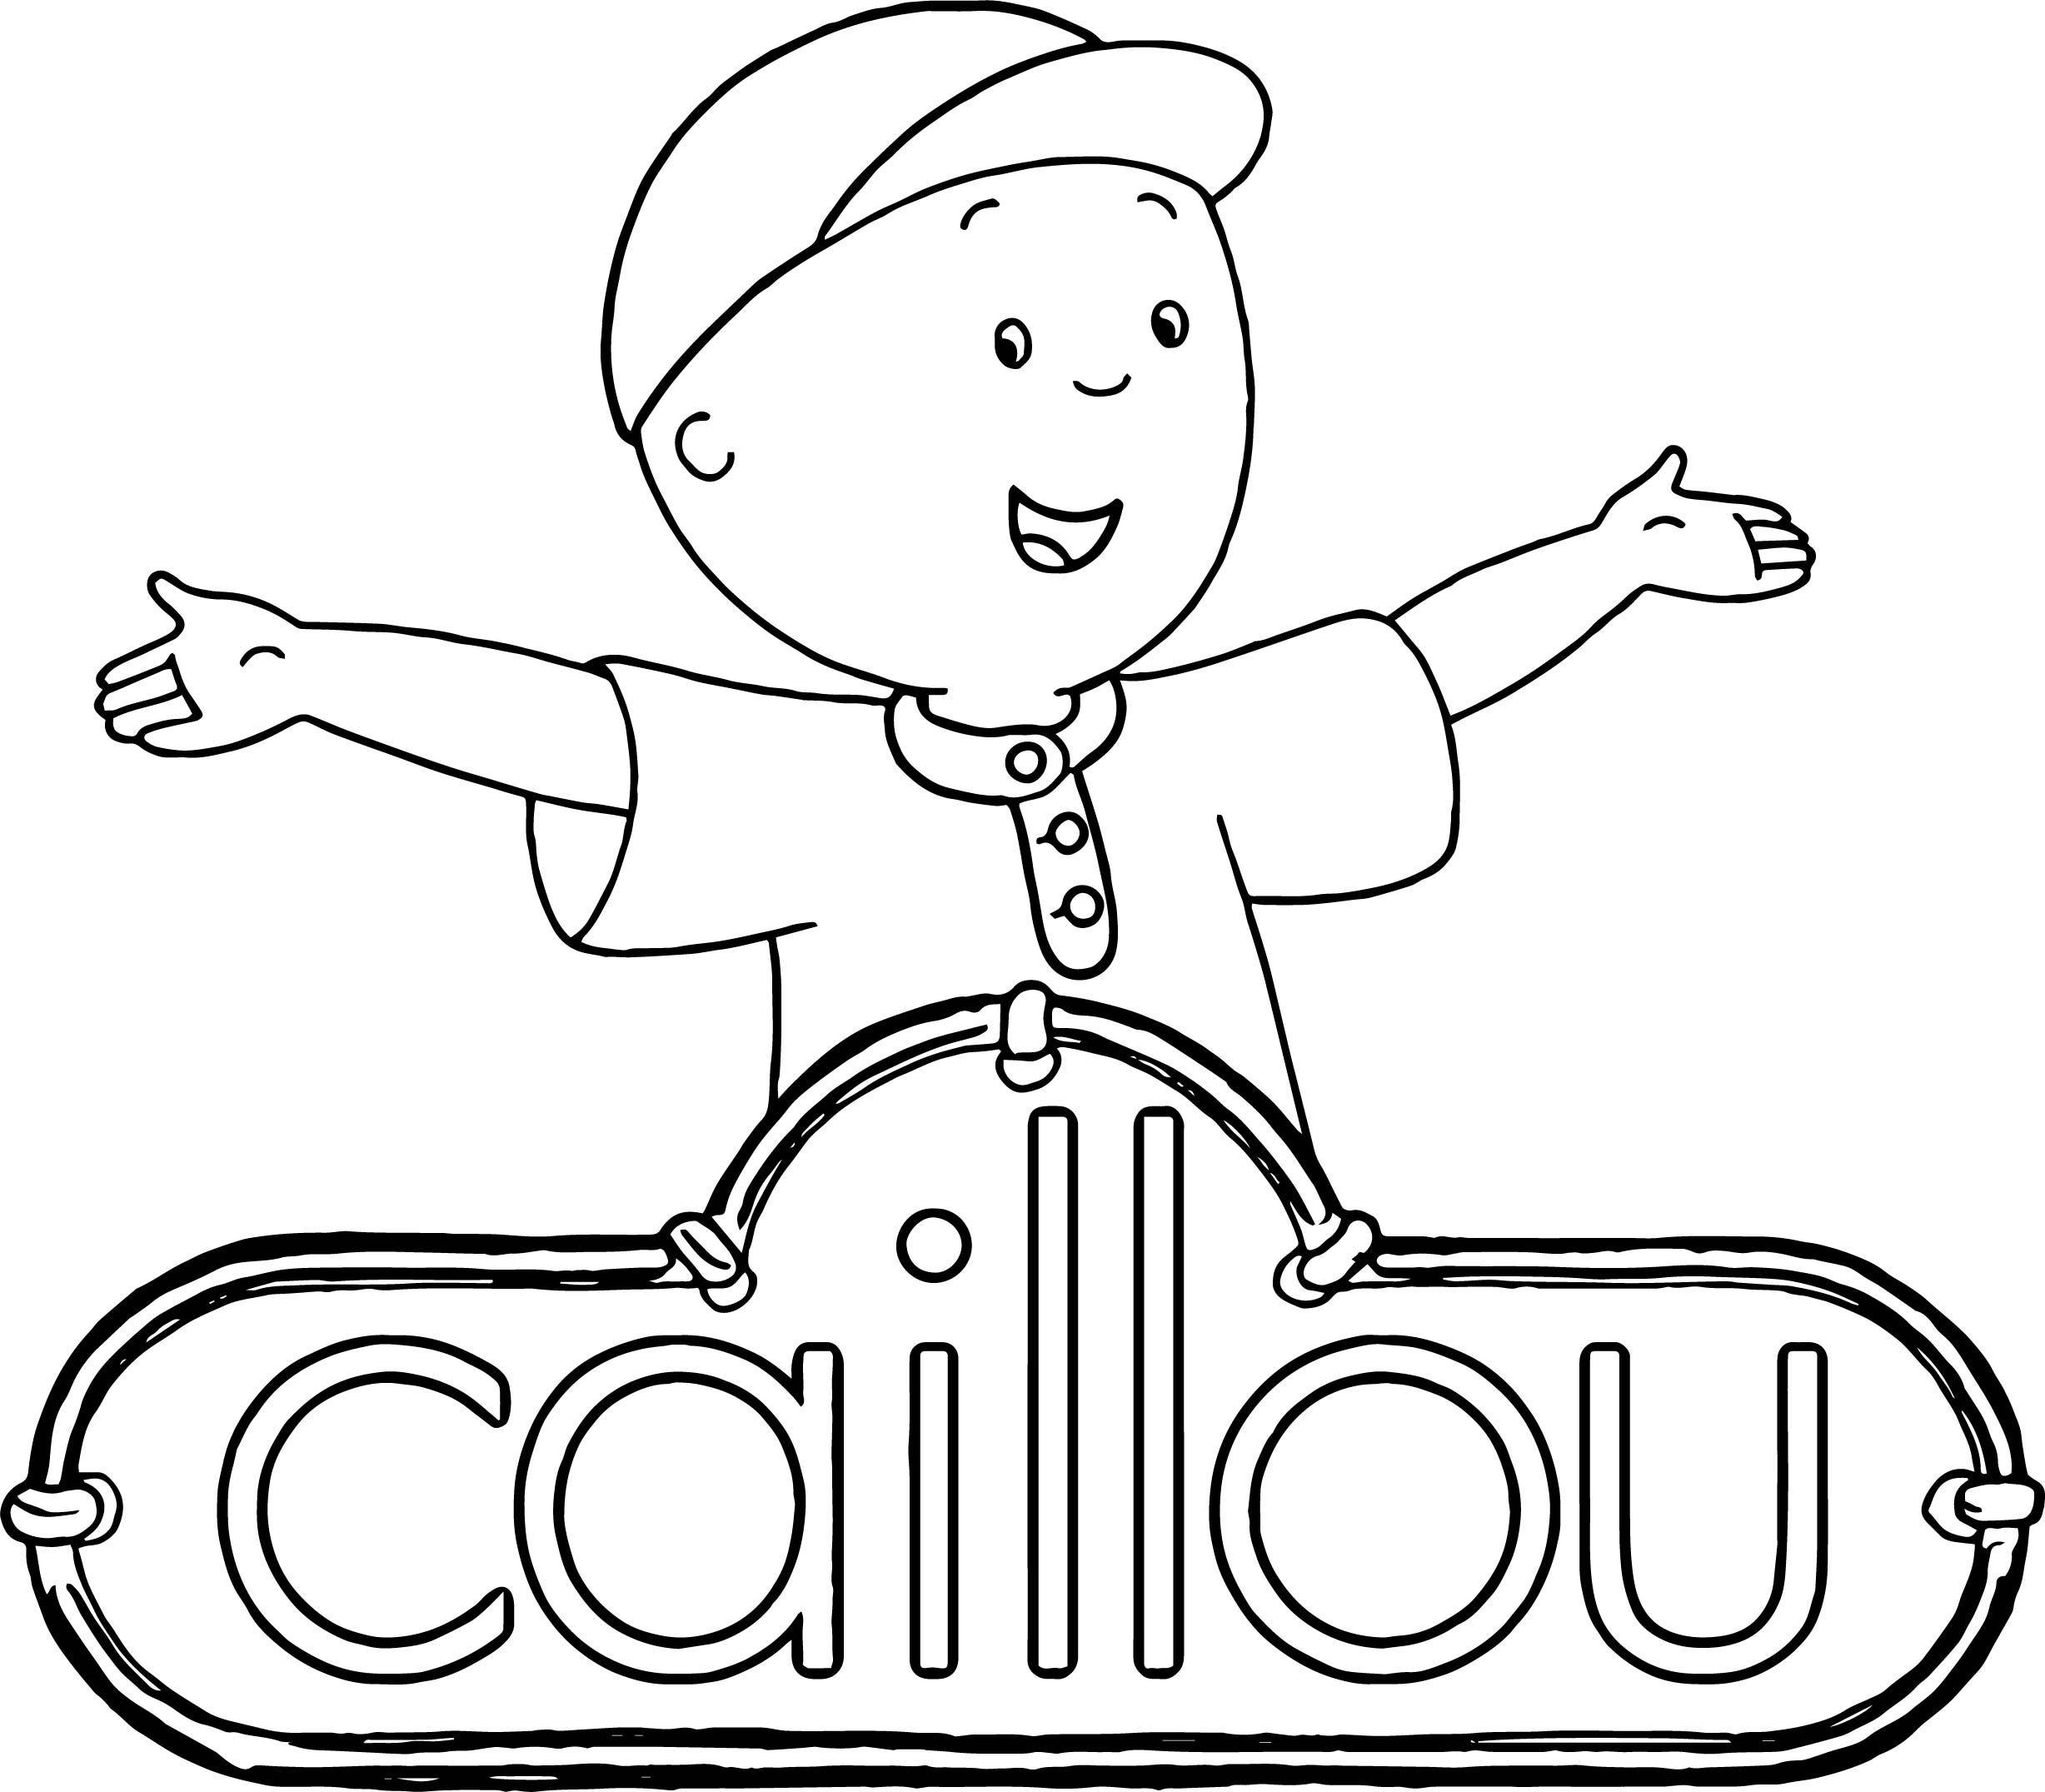 Caillou Logo - Caillou Logo New Coloring Page | Wecoloringpage.com